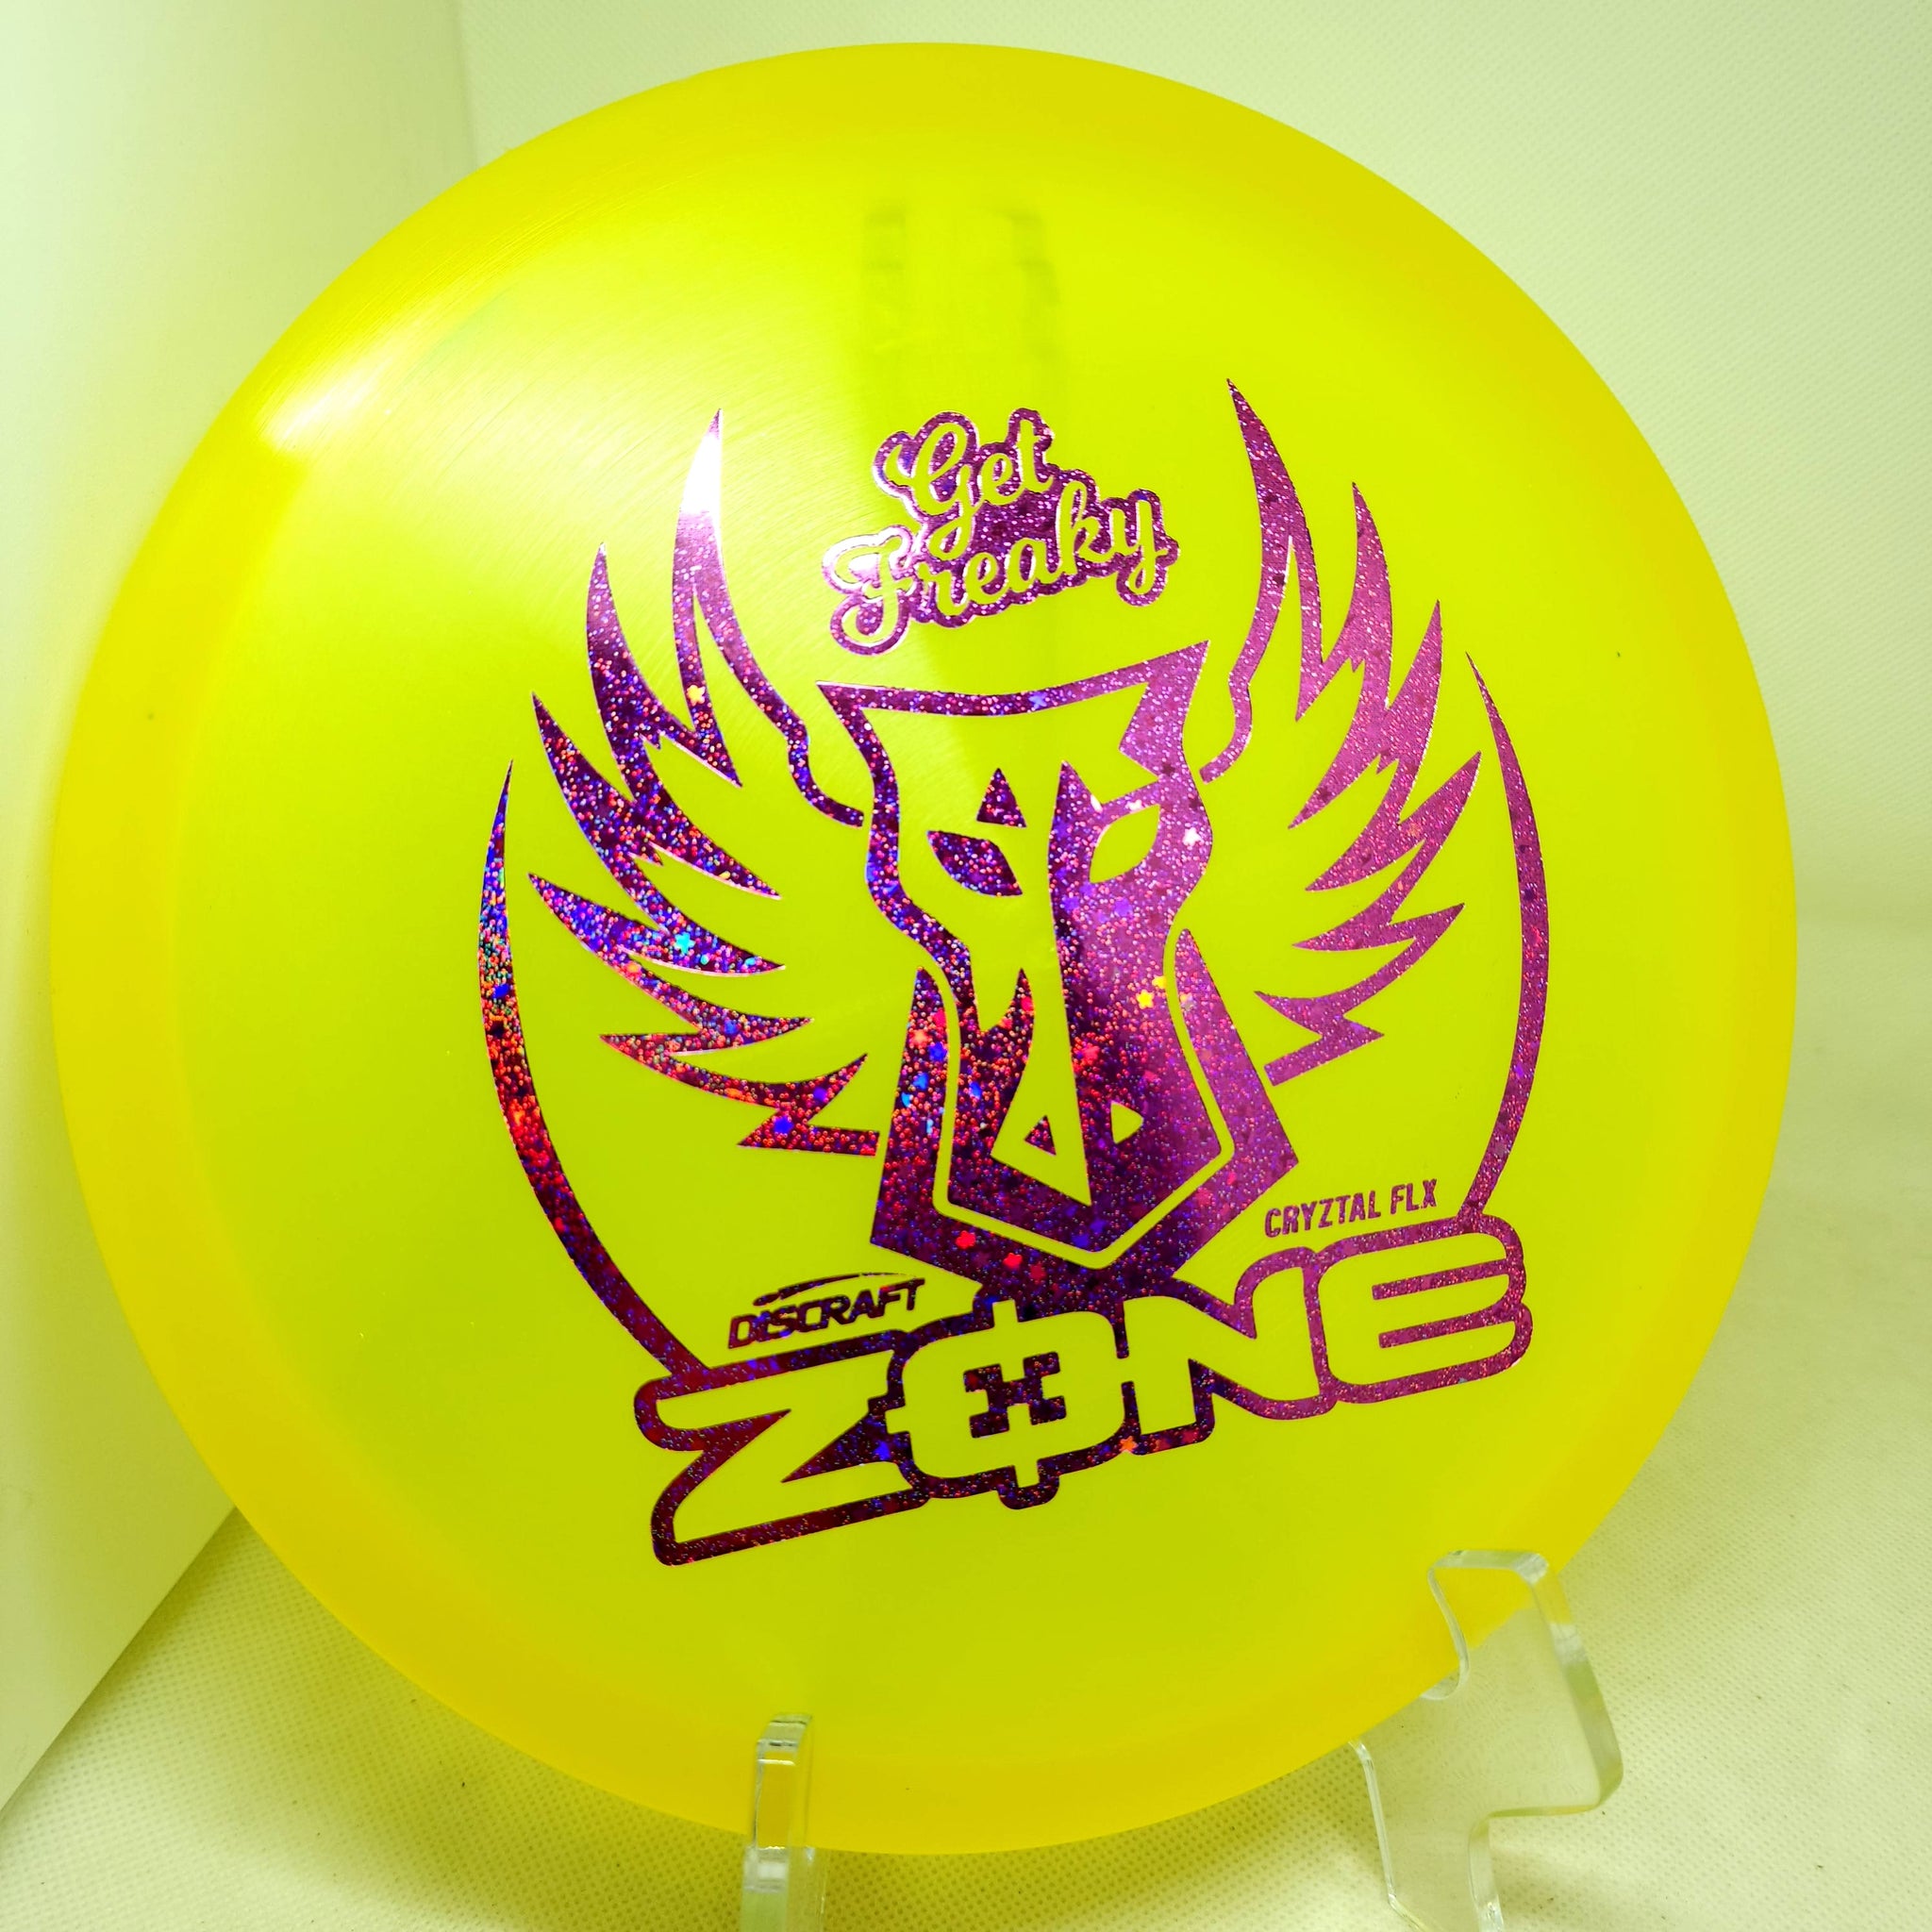 Zone ( Get Freaky Crystal FLX )